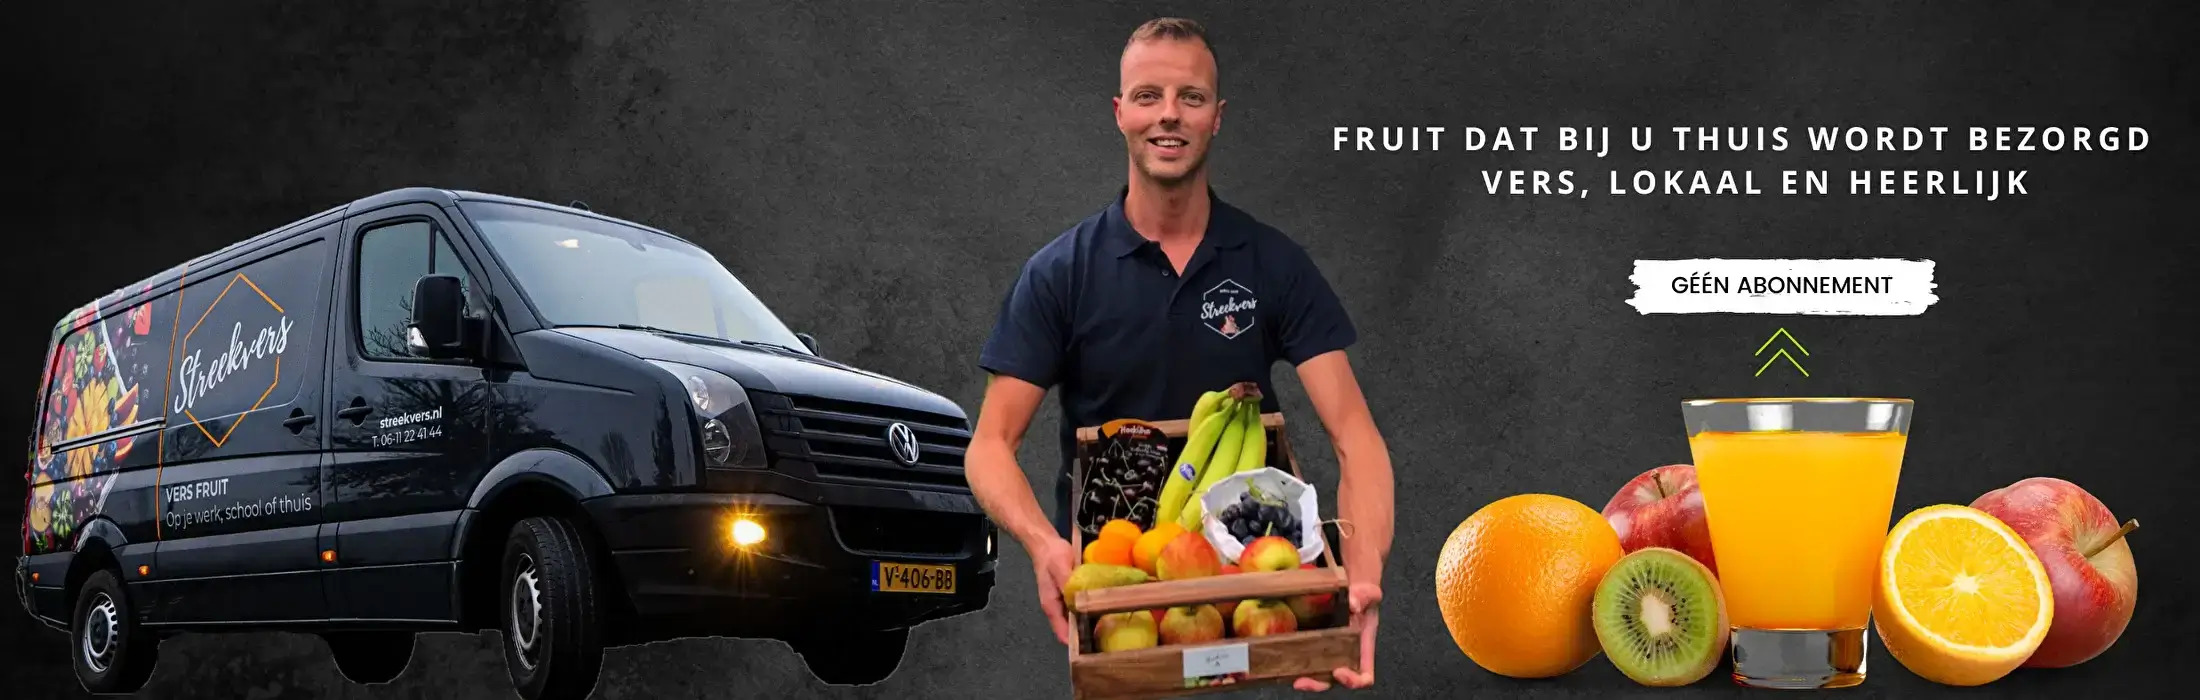 Charlotte Bronte Soepel longontsteking Fruit Bij u Thuis | Groente en thuisfruit vers aan huis bezorgd!